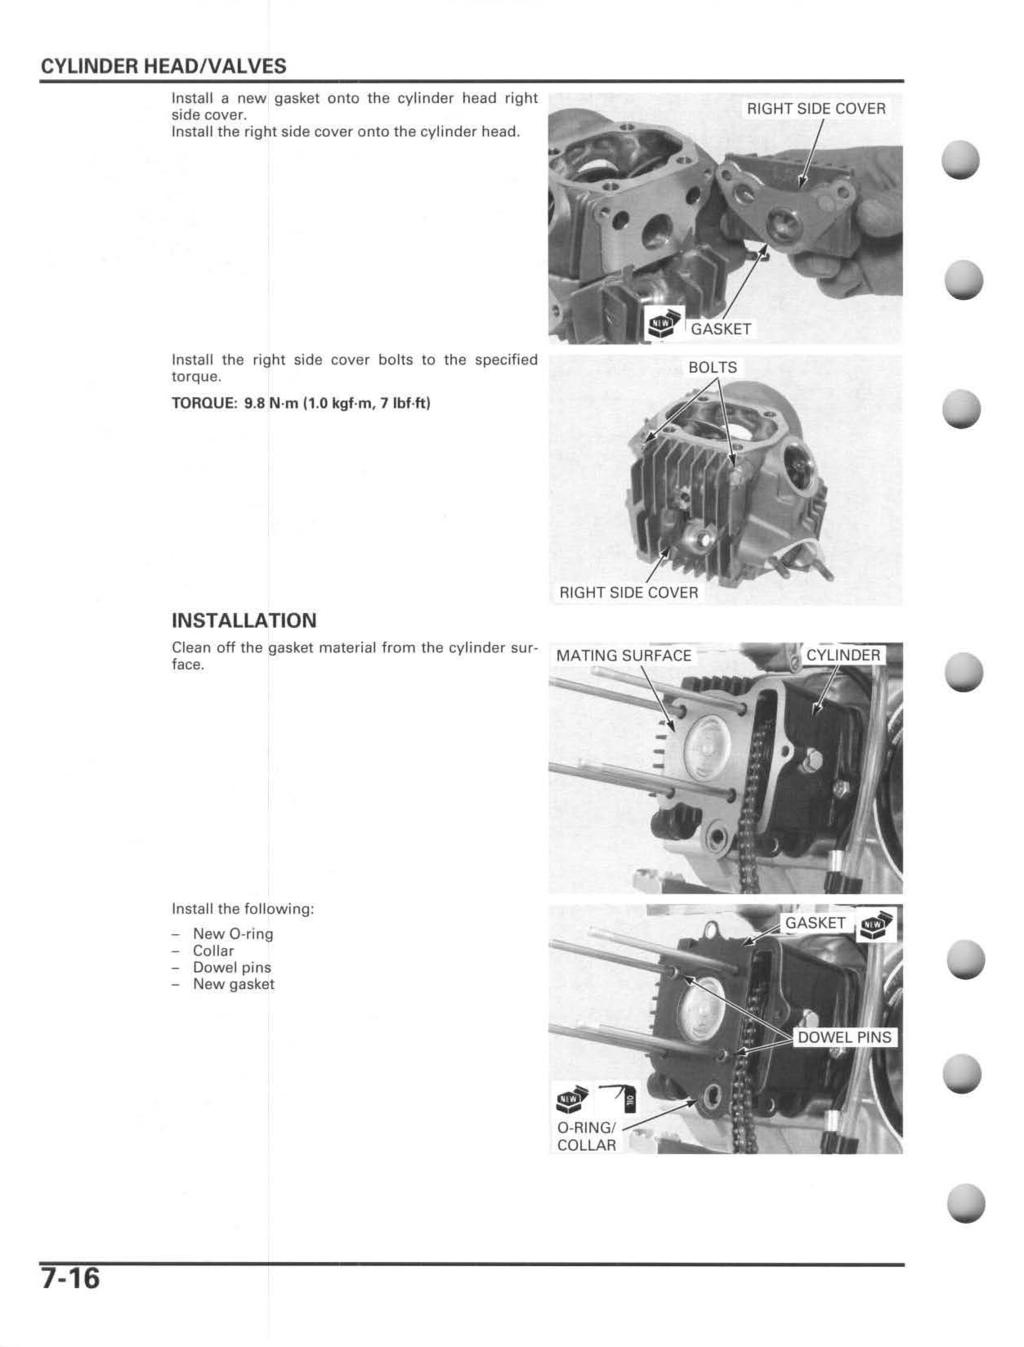 CYLINDER HEADIV ALVES Install a new gasket onto the cylinder head right side cover. Install the right side cover onto the cylinder head. Install the right side cover bolts to the specified torque.